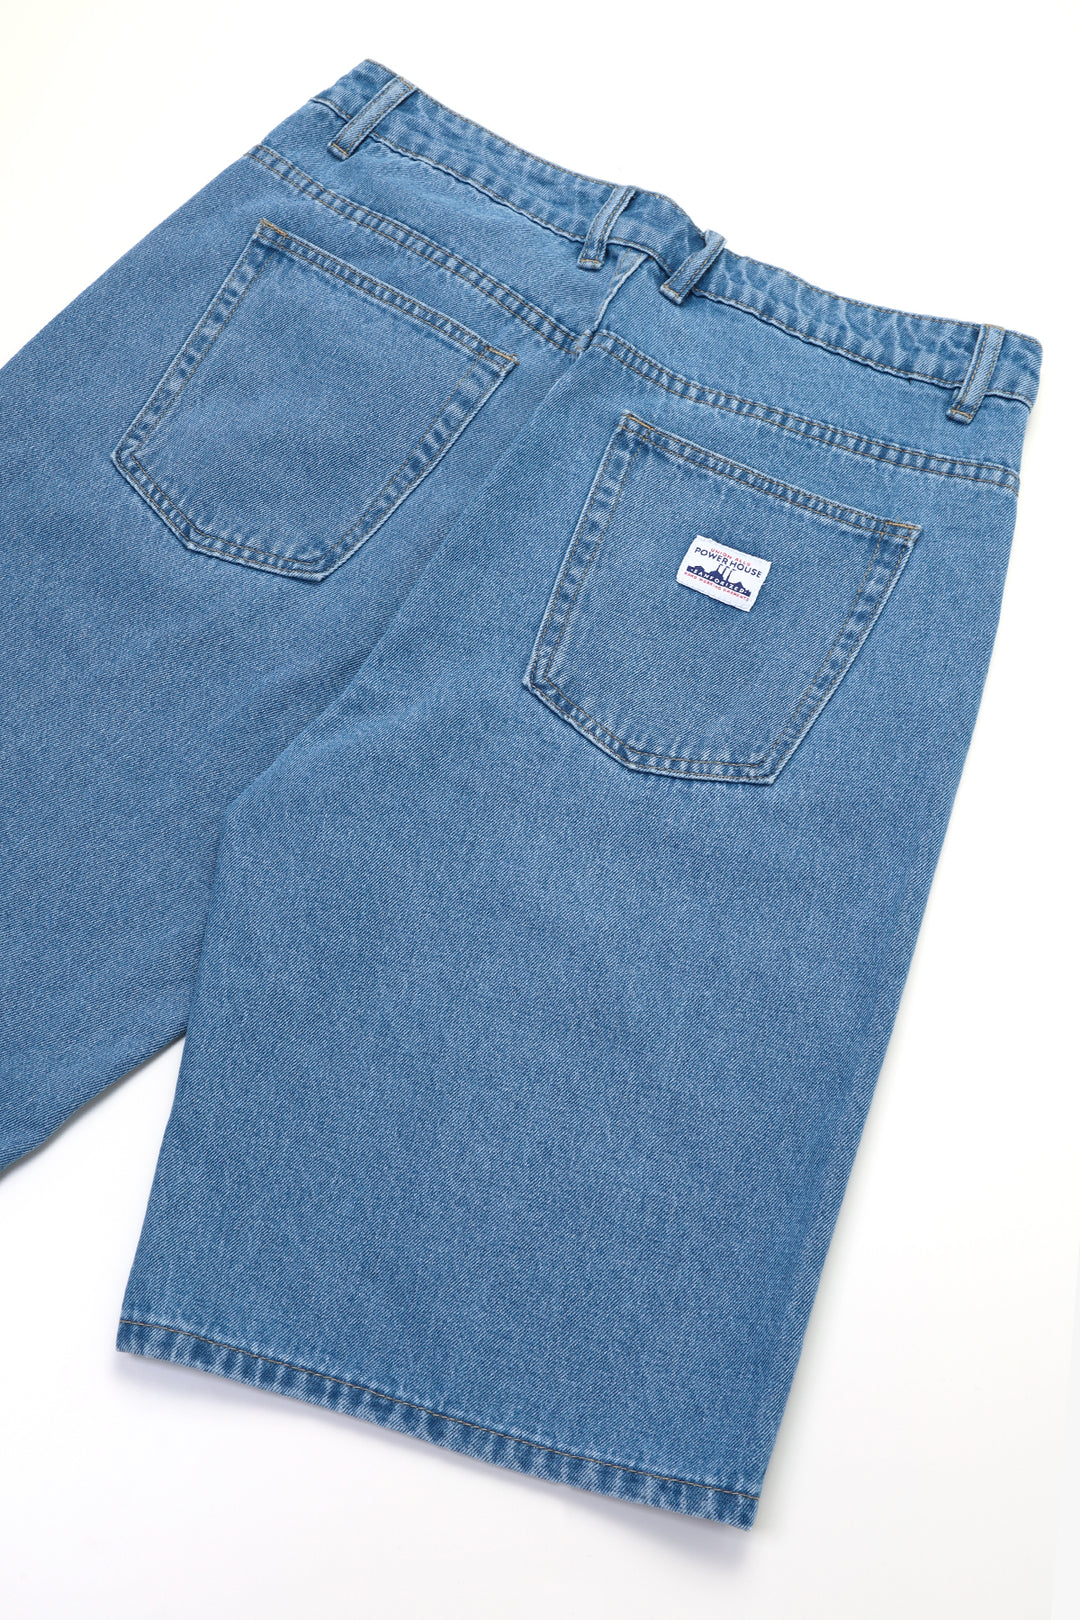 Power Goods - 90's Denim Shorts - Washed Blue